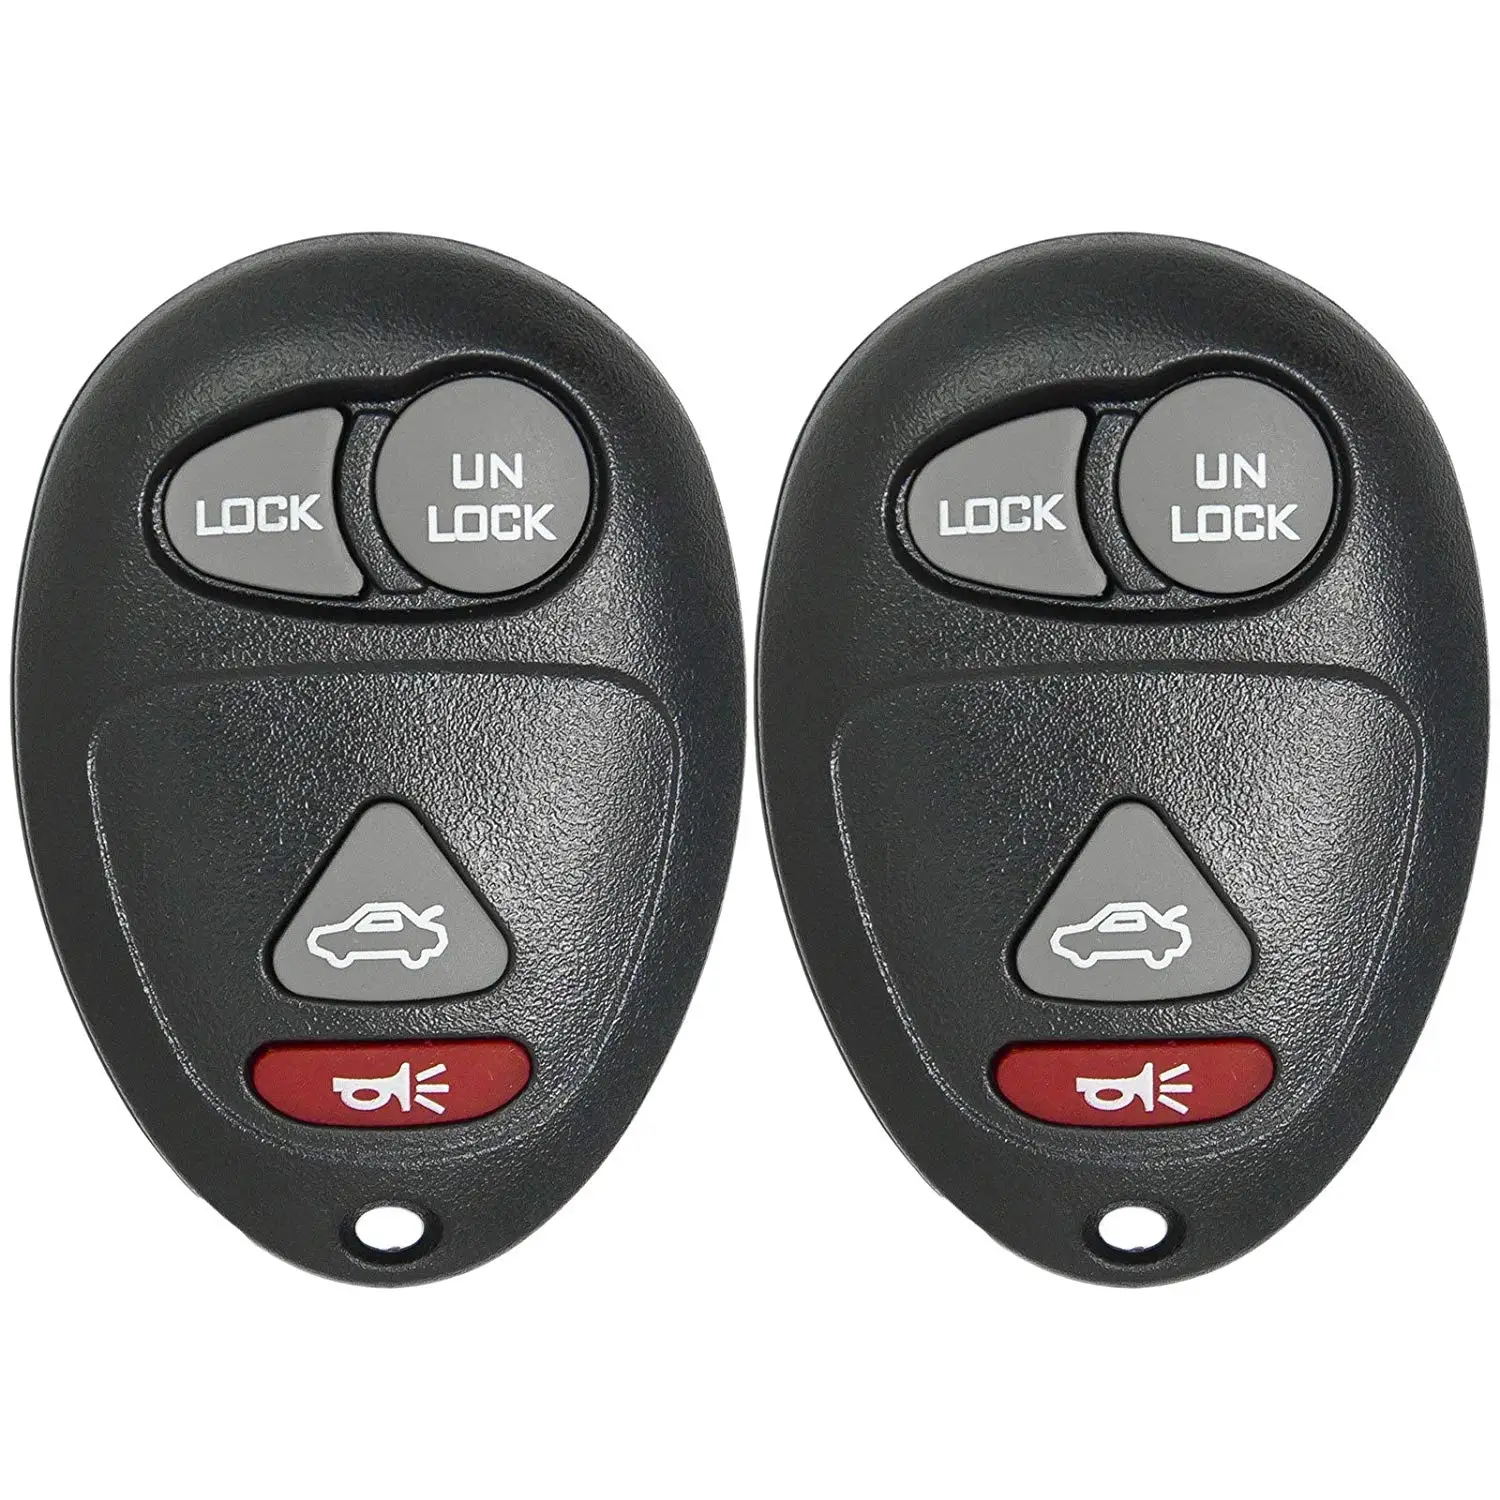 Buy Keyless2Go Keyless Entry Remote Car Key for RAM Vehicles That Use 4